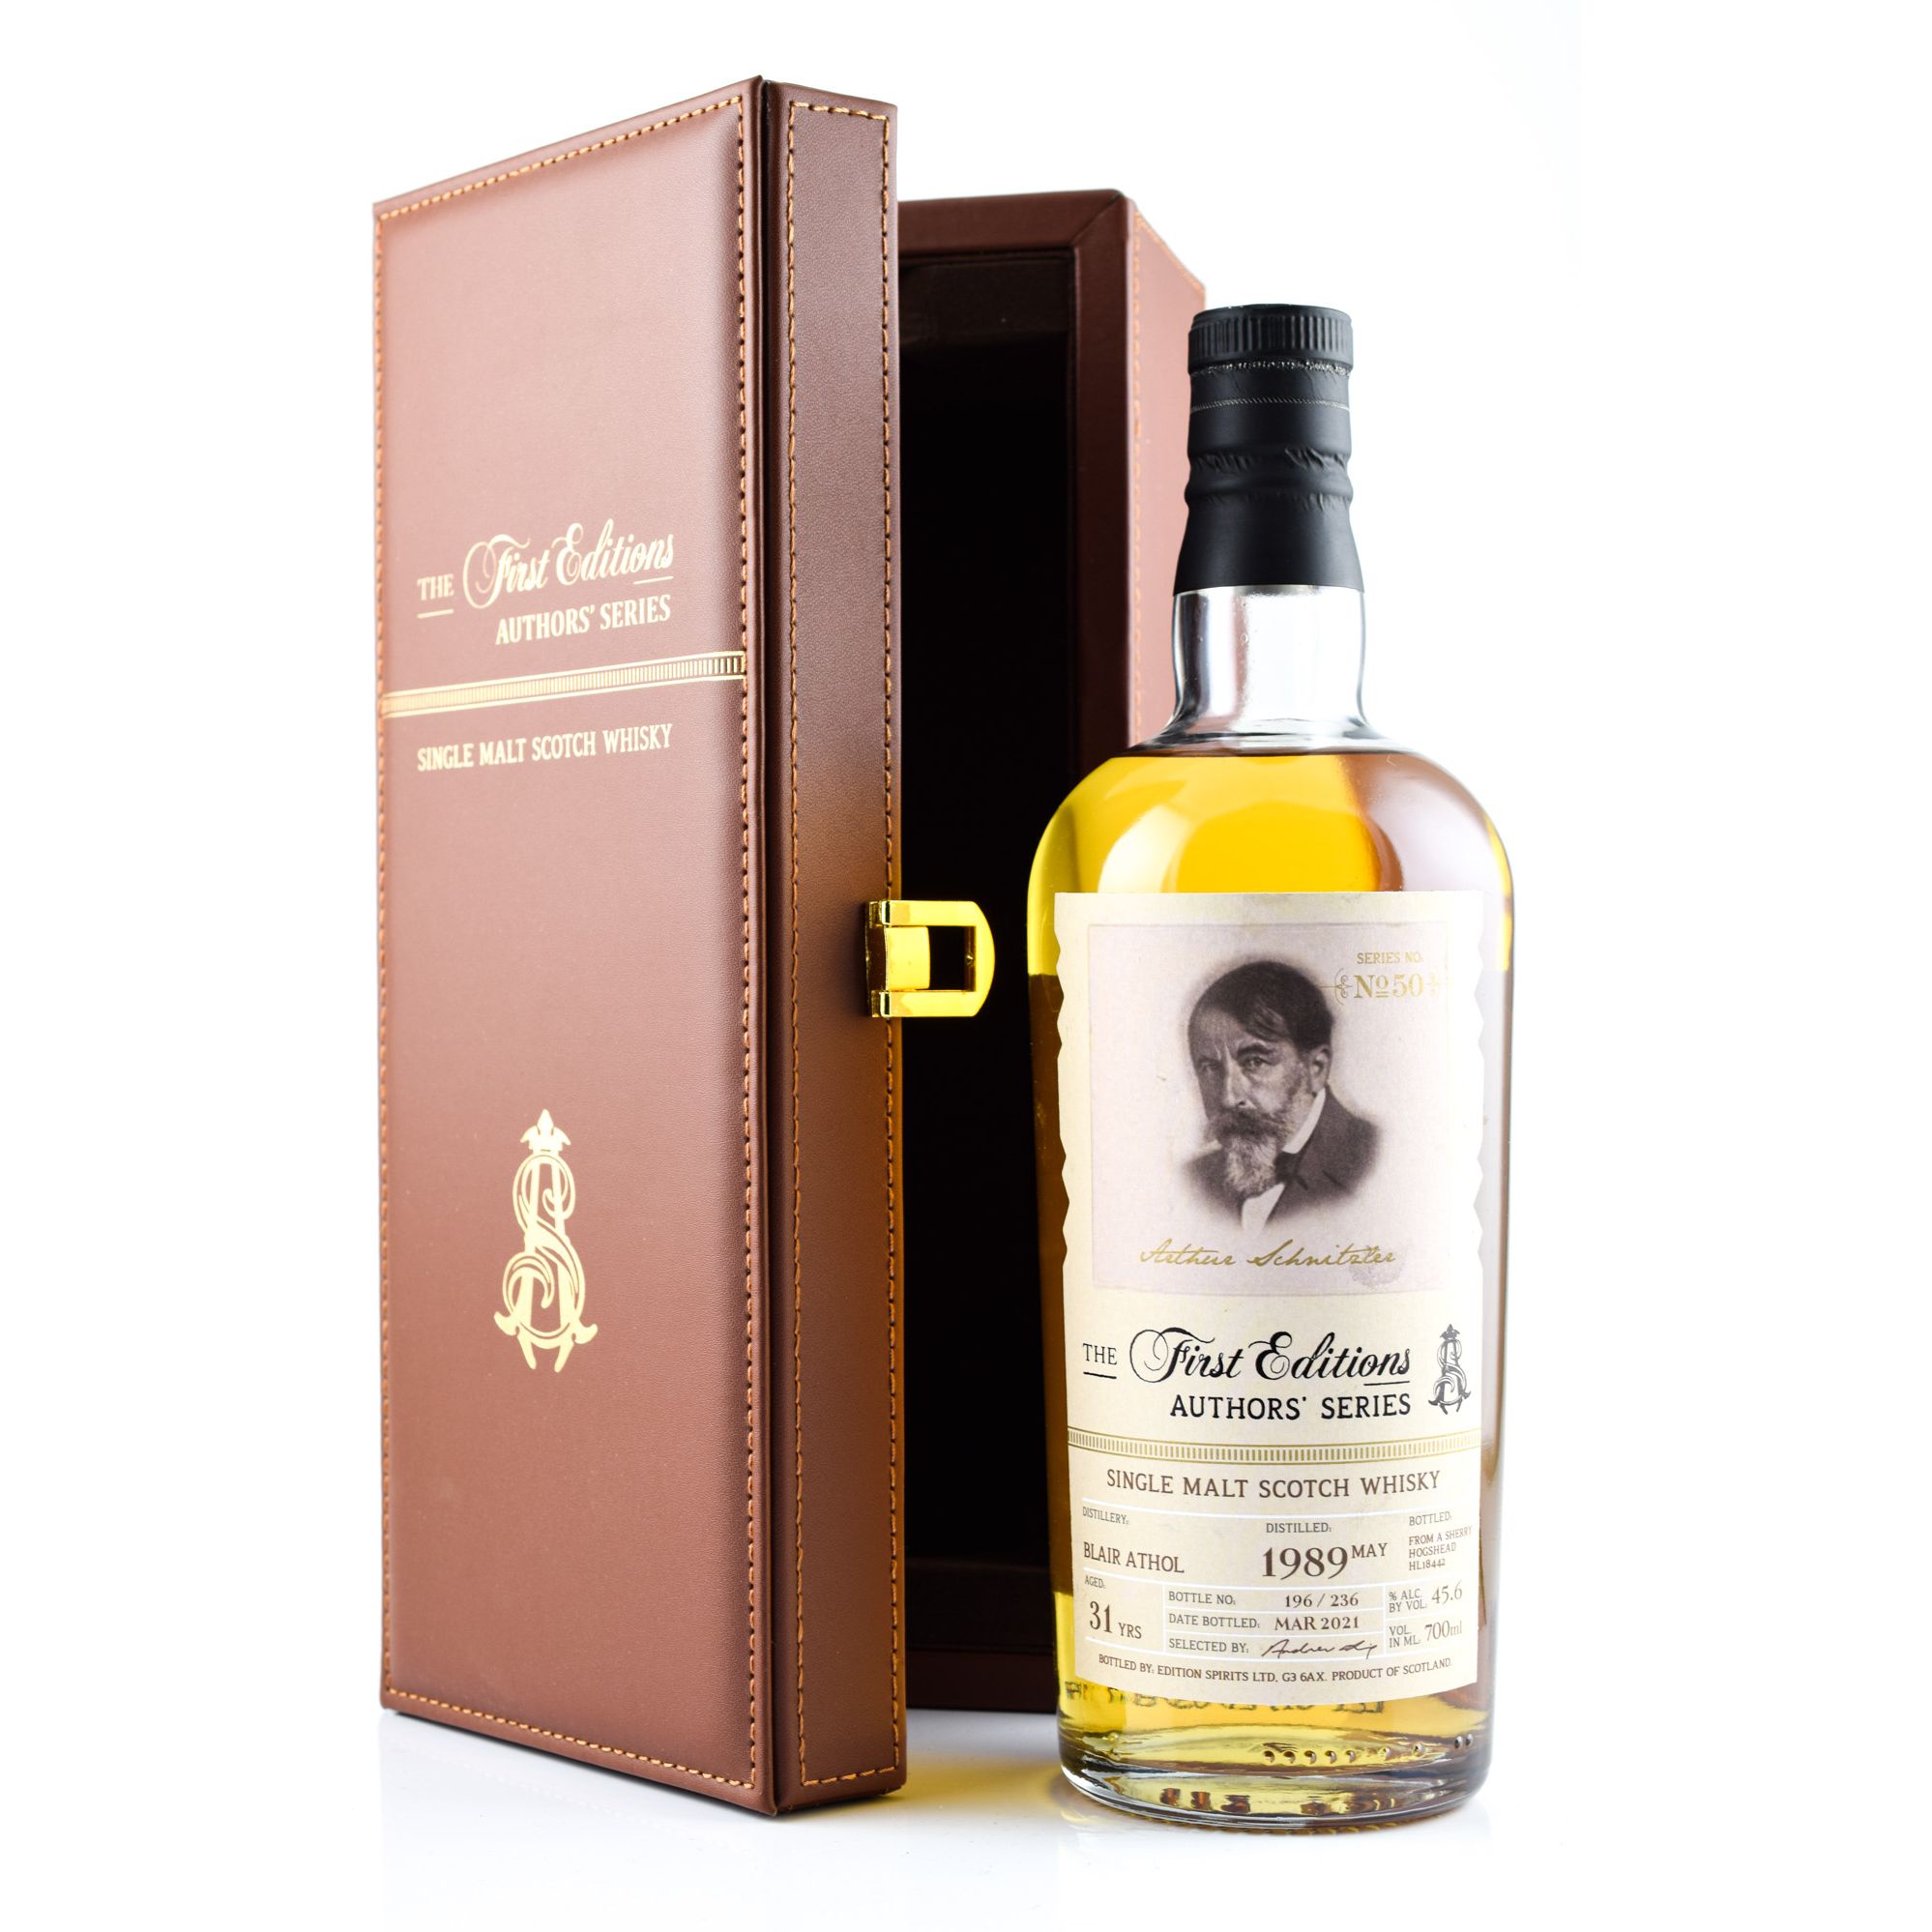 Виски Blair Athol 31 Years Old - First Edition Author's Series Artur Schnitzler 45.6% 0.7 л в подарочной коробке - фото 2